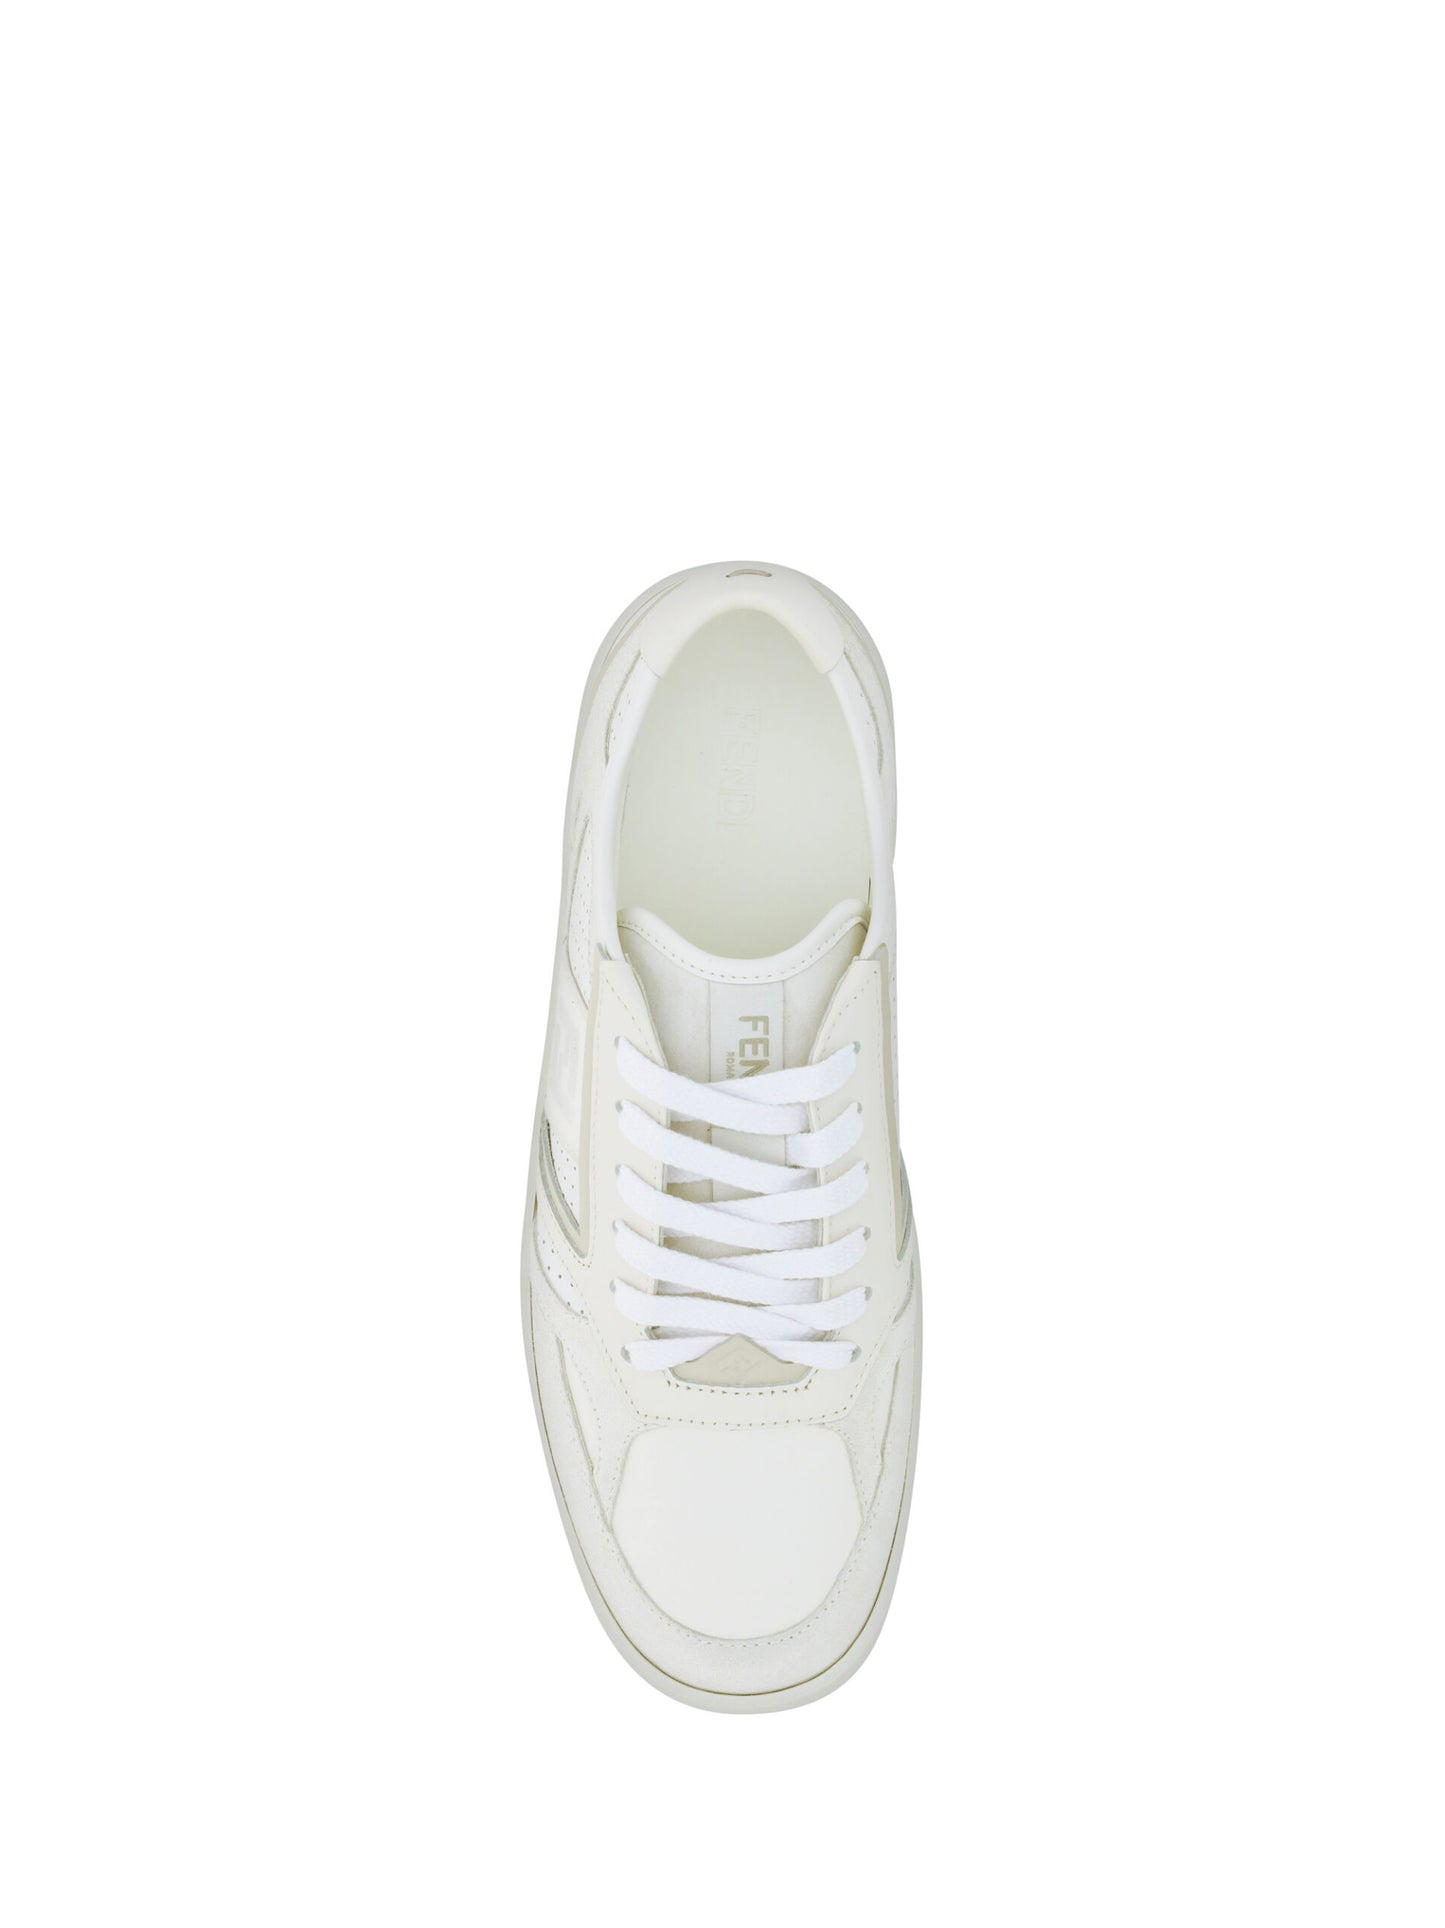 Fendi Men's White Calf Leather Low Top Sneakers